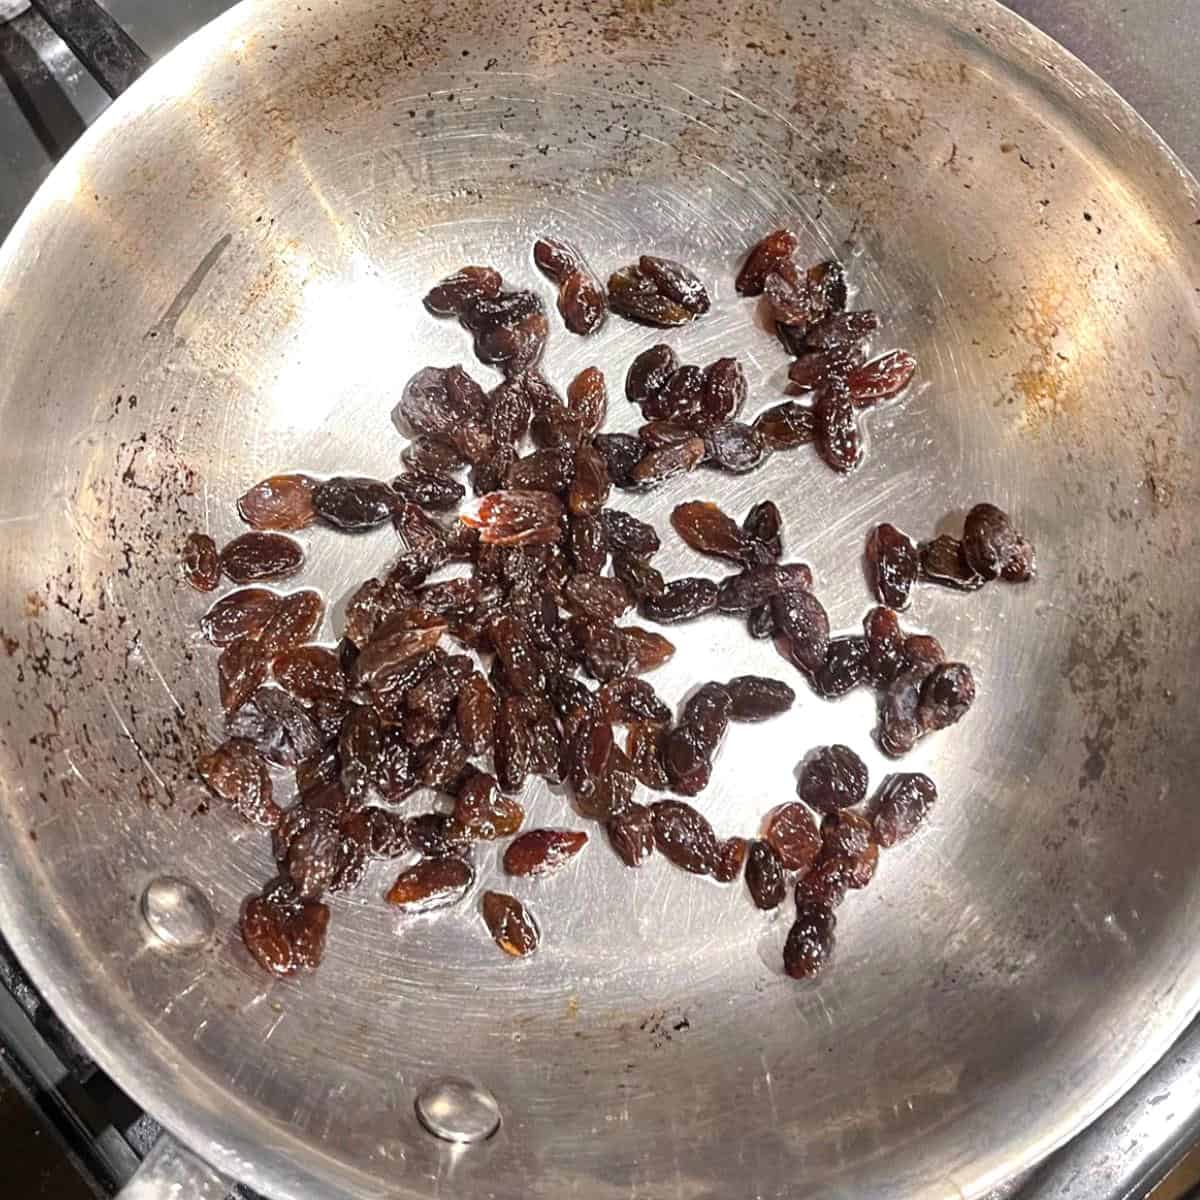 Raisins cooking in skillet.